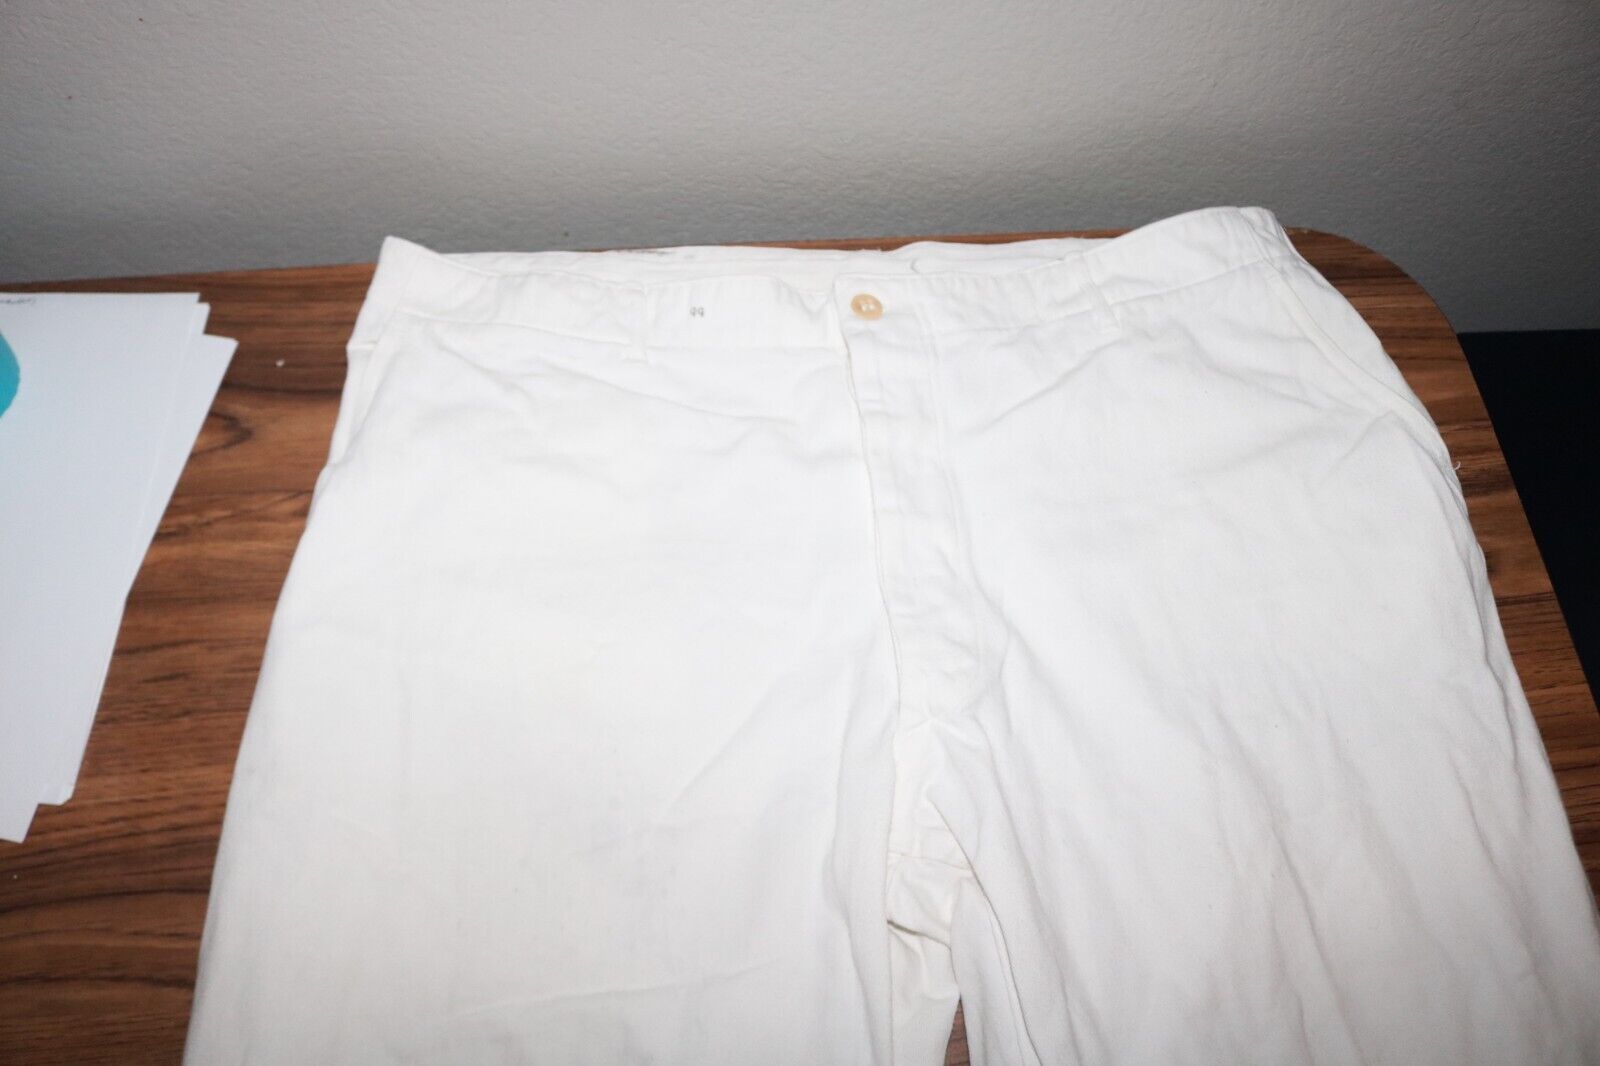 RARE WWII US Army white cook uniform pants sz XL 44x30  excellent condition